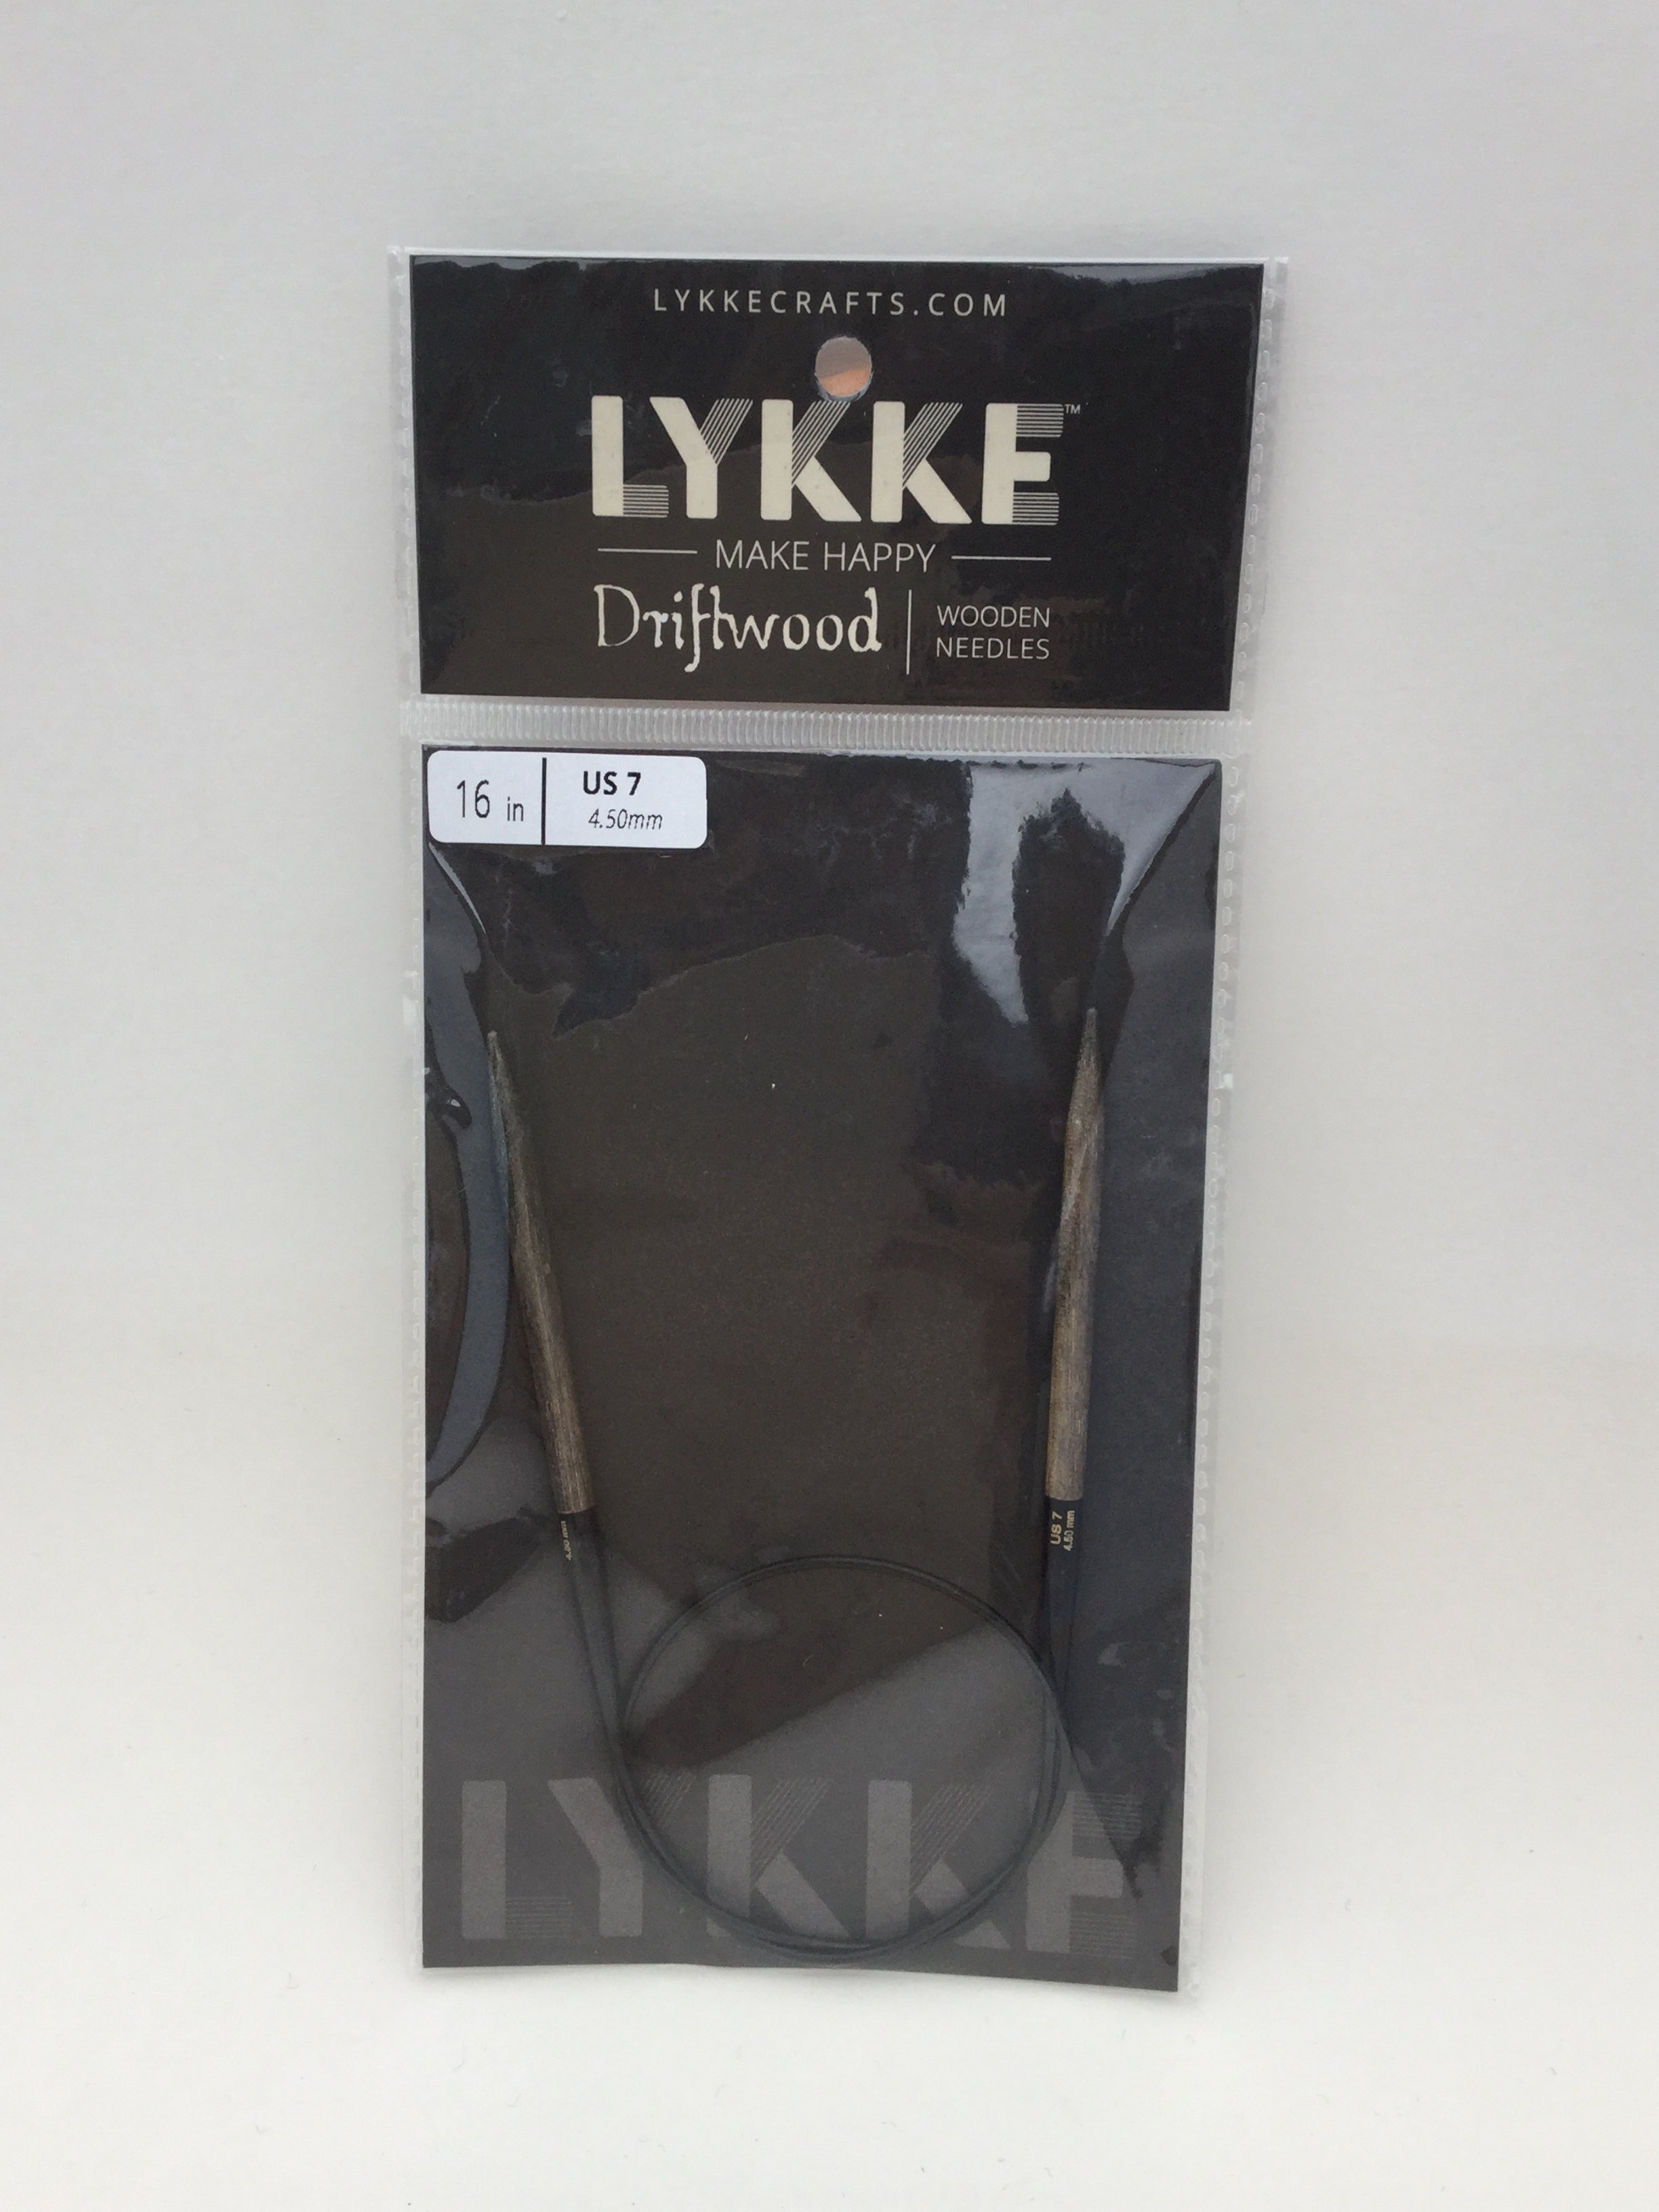 16-inch Driftwood Circular needles from Lykke